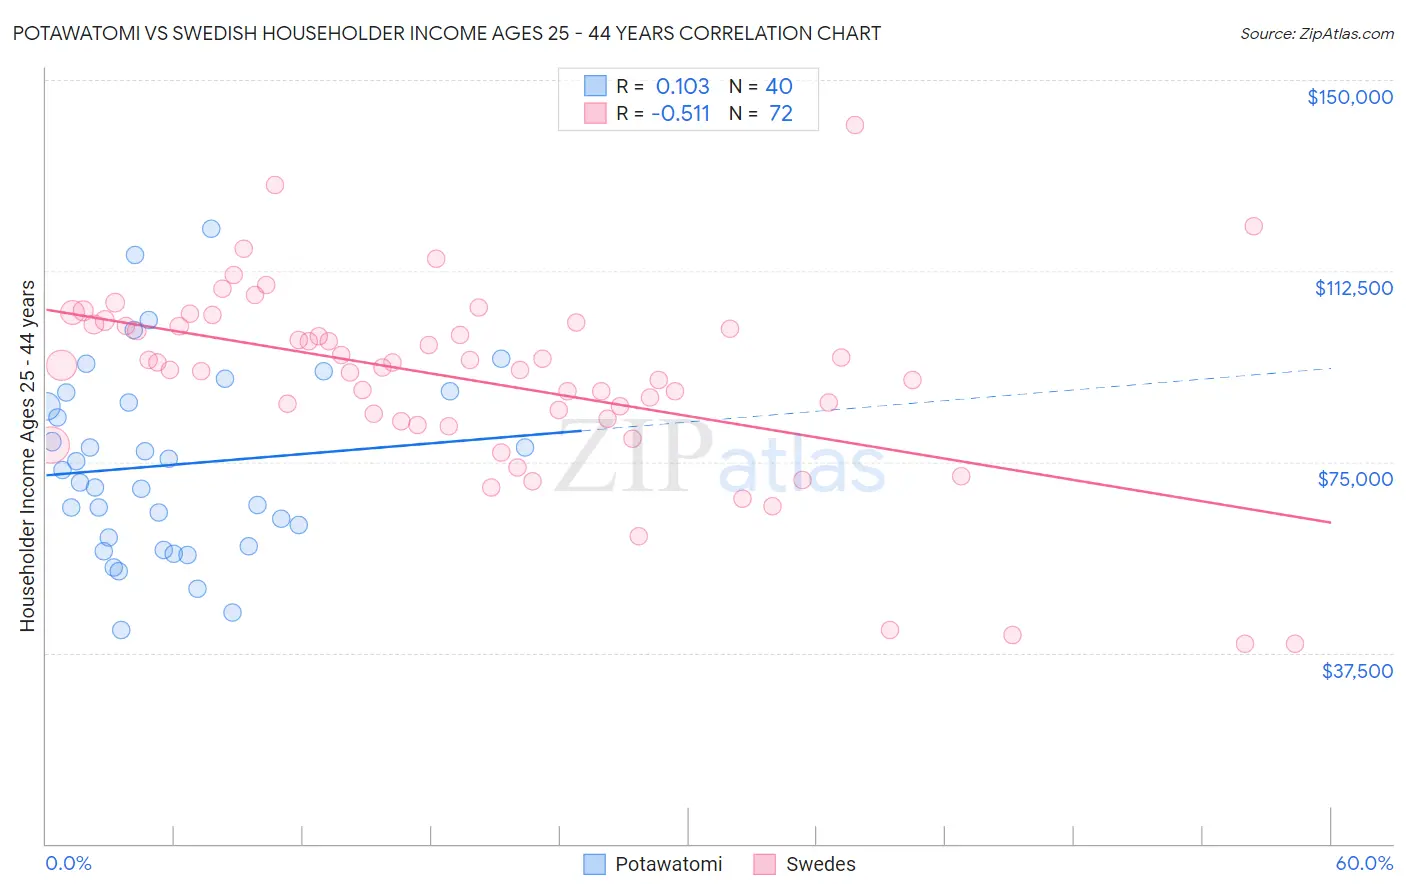 Potawatomi vs Swedish Householder Income Ages 25 - 44 years